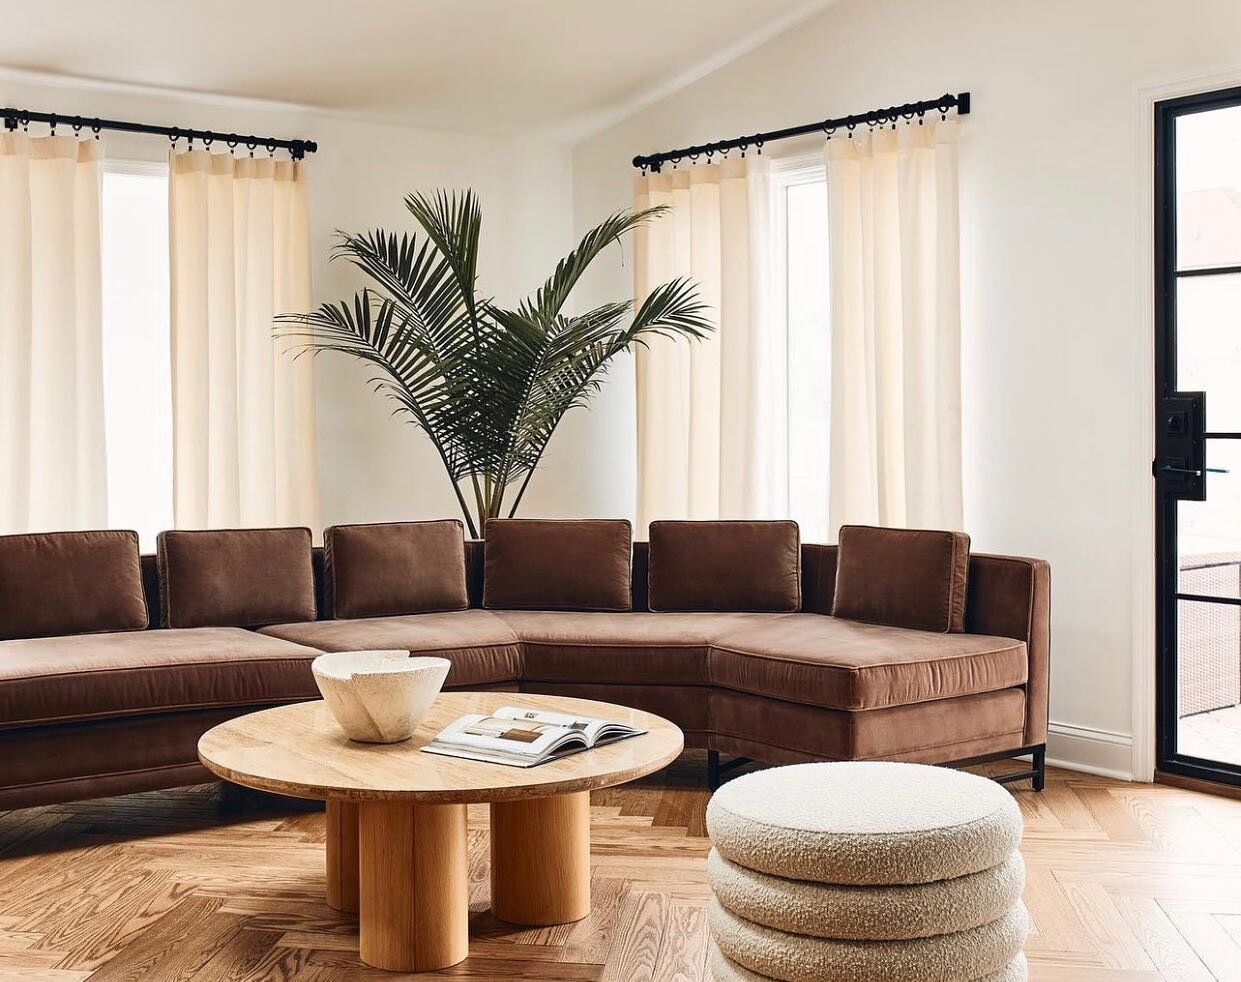 #Repost: oldie, but goodie. 

Our #MoorestownProject Lounge &mdash; perfect for summer hangouts ☀️

📸: @acbatog 
Design: @kbennert &amp; @rachellelazzaro
Stylist: @noiretblanc.co 

#interiordesign #interiordesigner #philadelphiainteriordesign #newyo